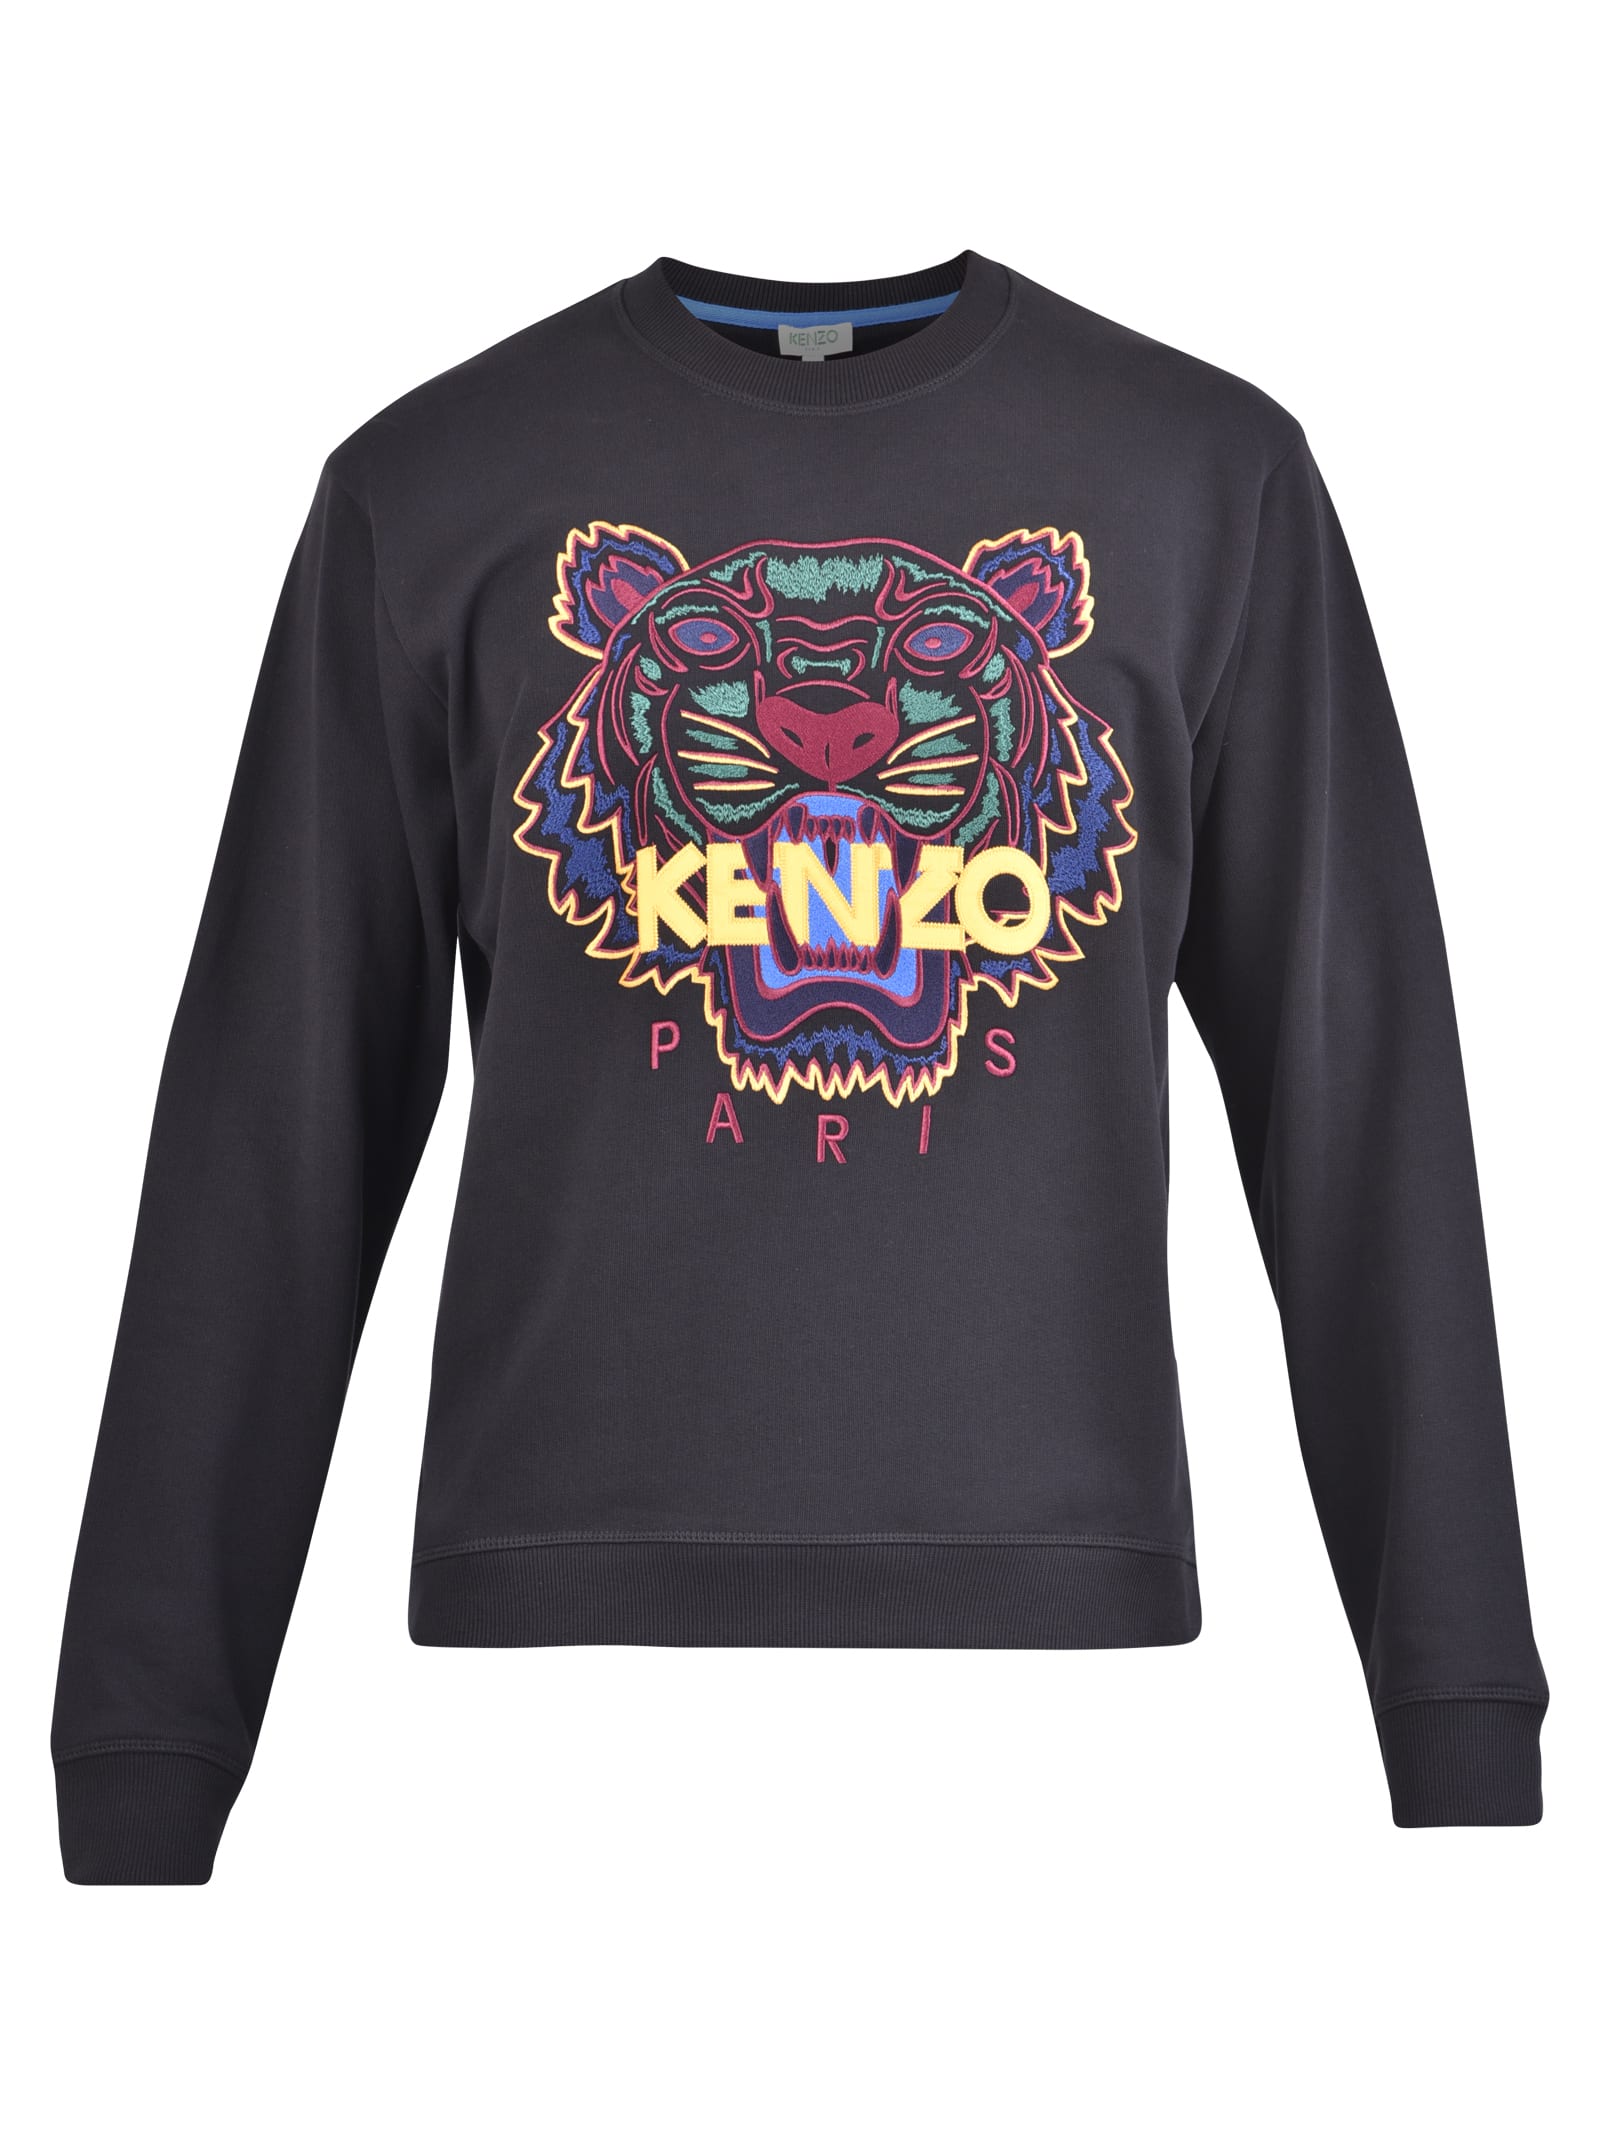 kenzo shirt long sleeve